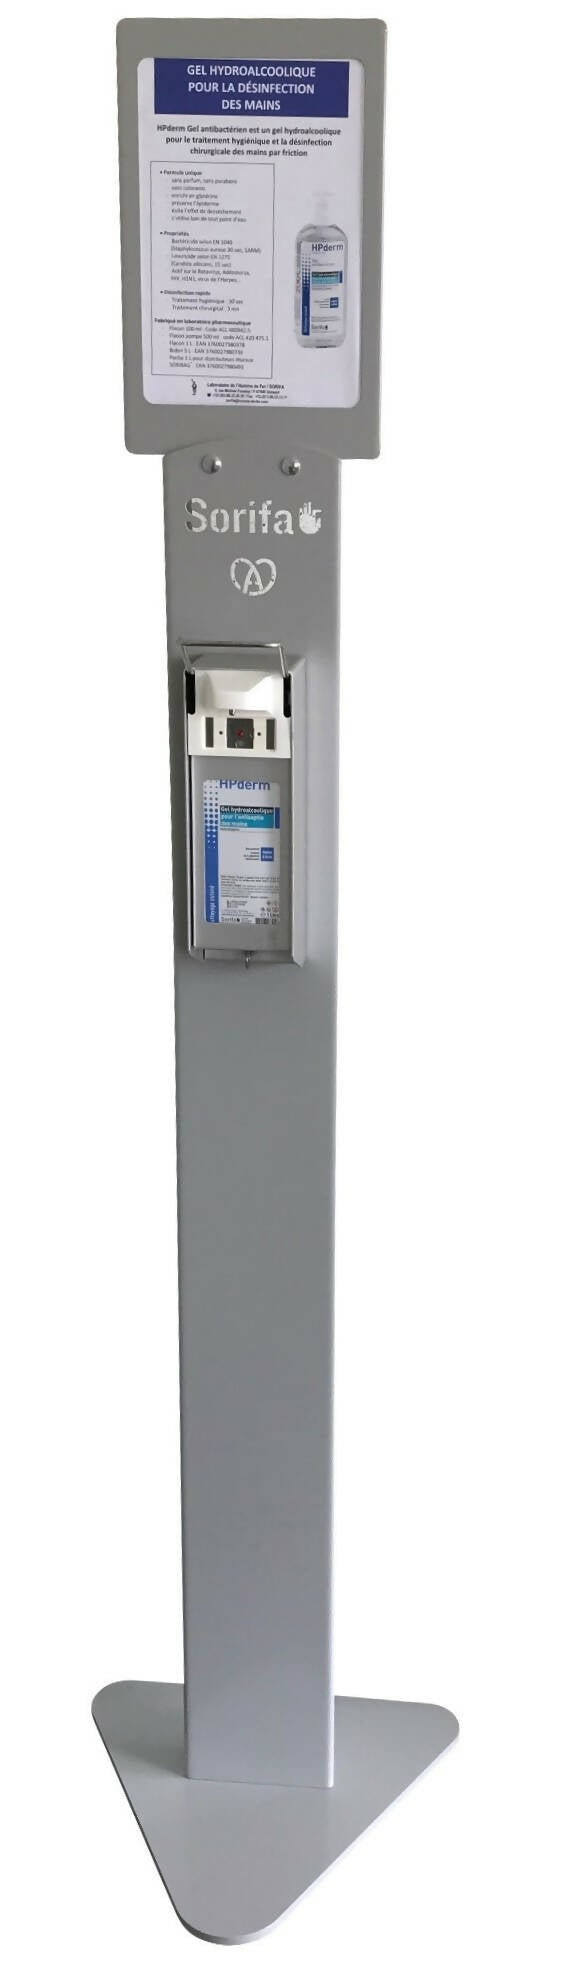 SORIFA - Set of 5 - Robust, ergonomic, lockable metal wall dispenser for 1L SORIFA brand bottle - For gels and liquid soaps.